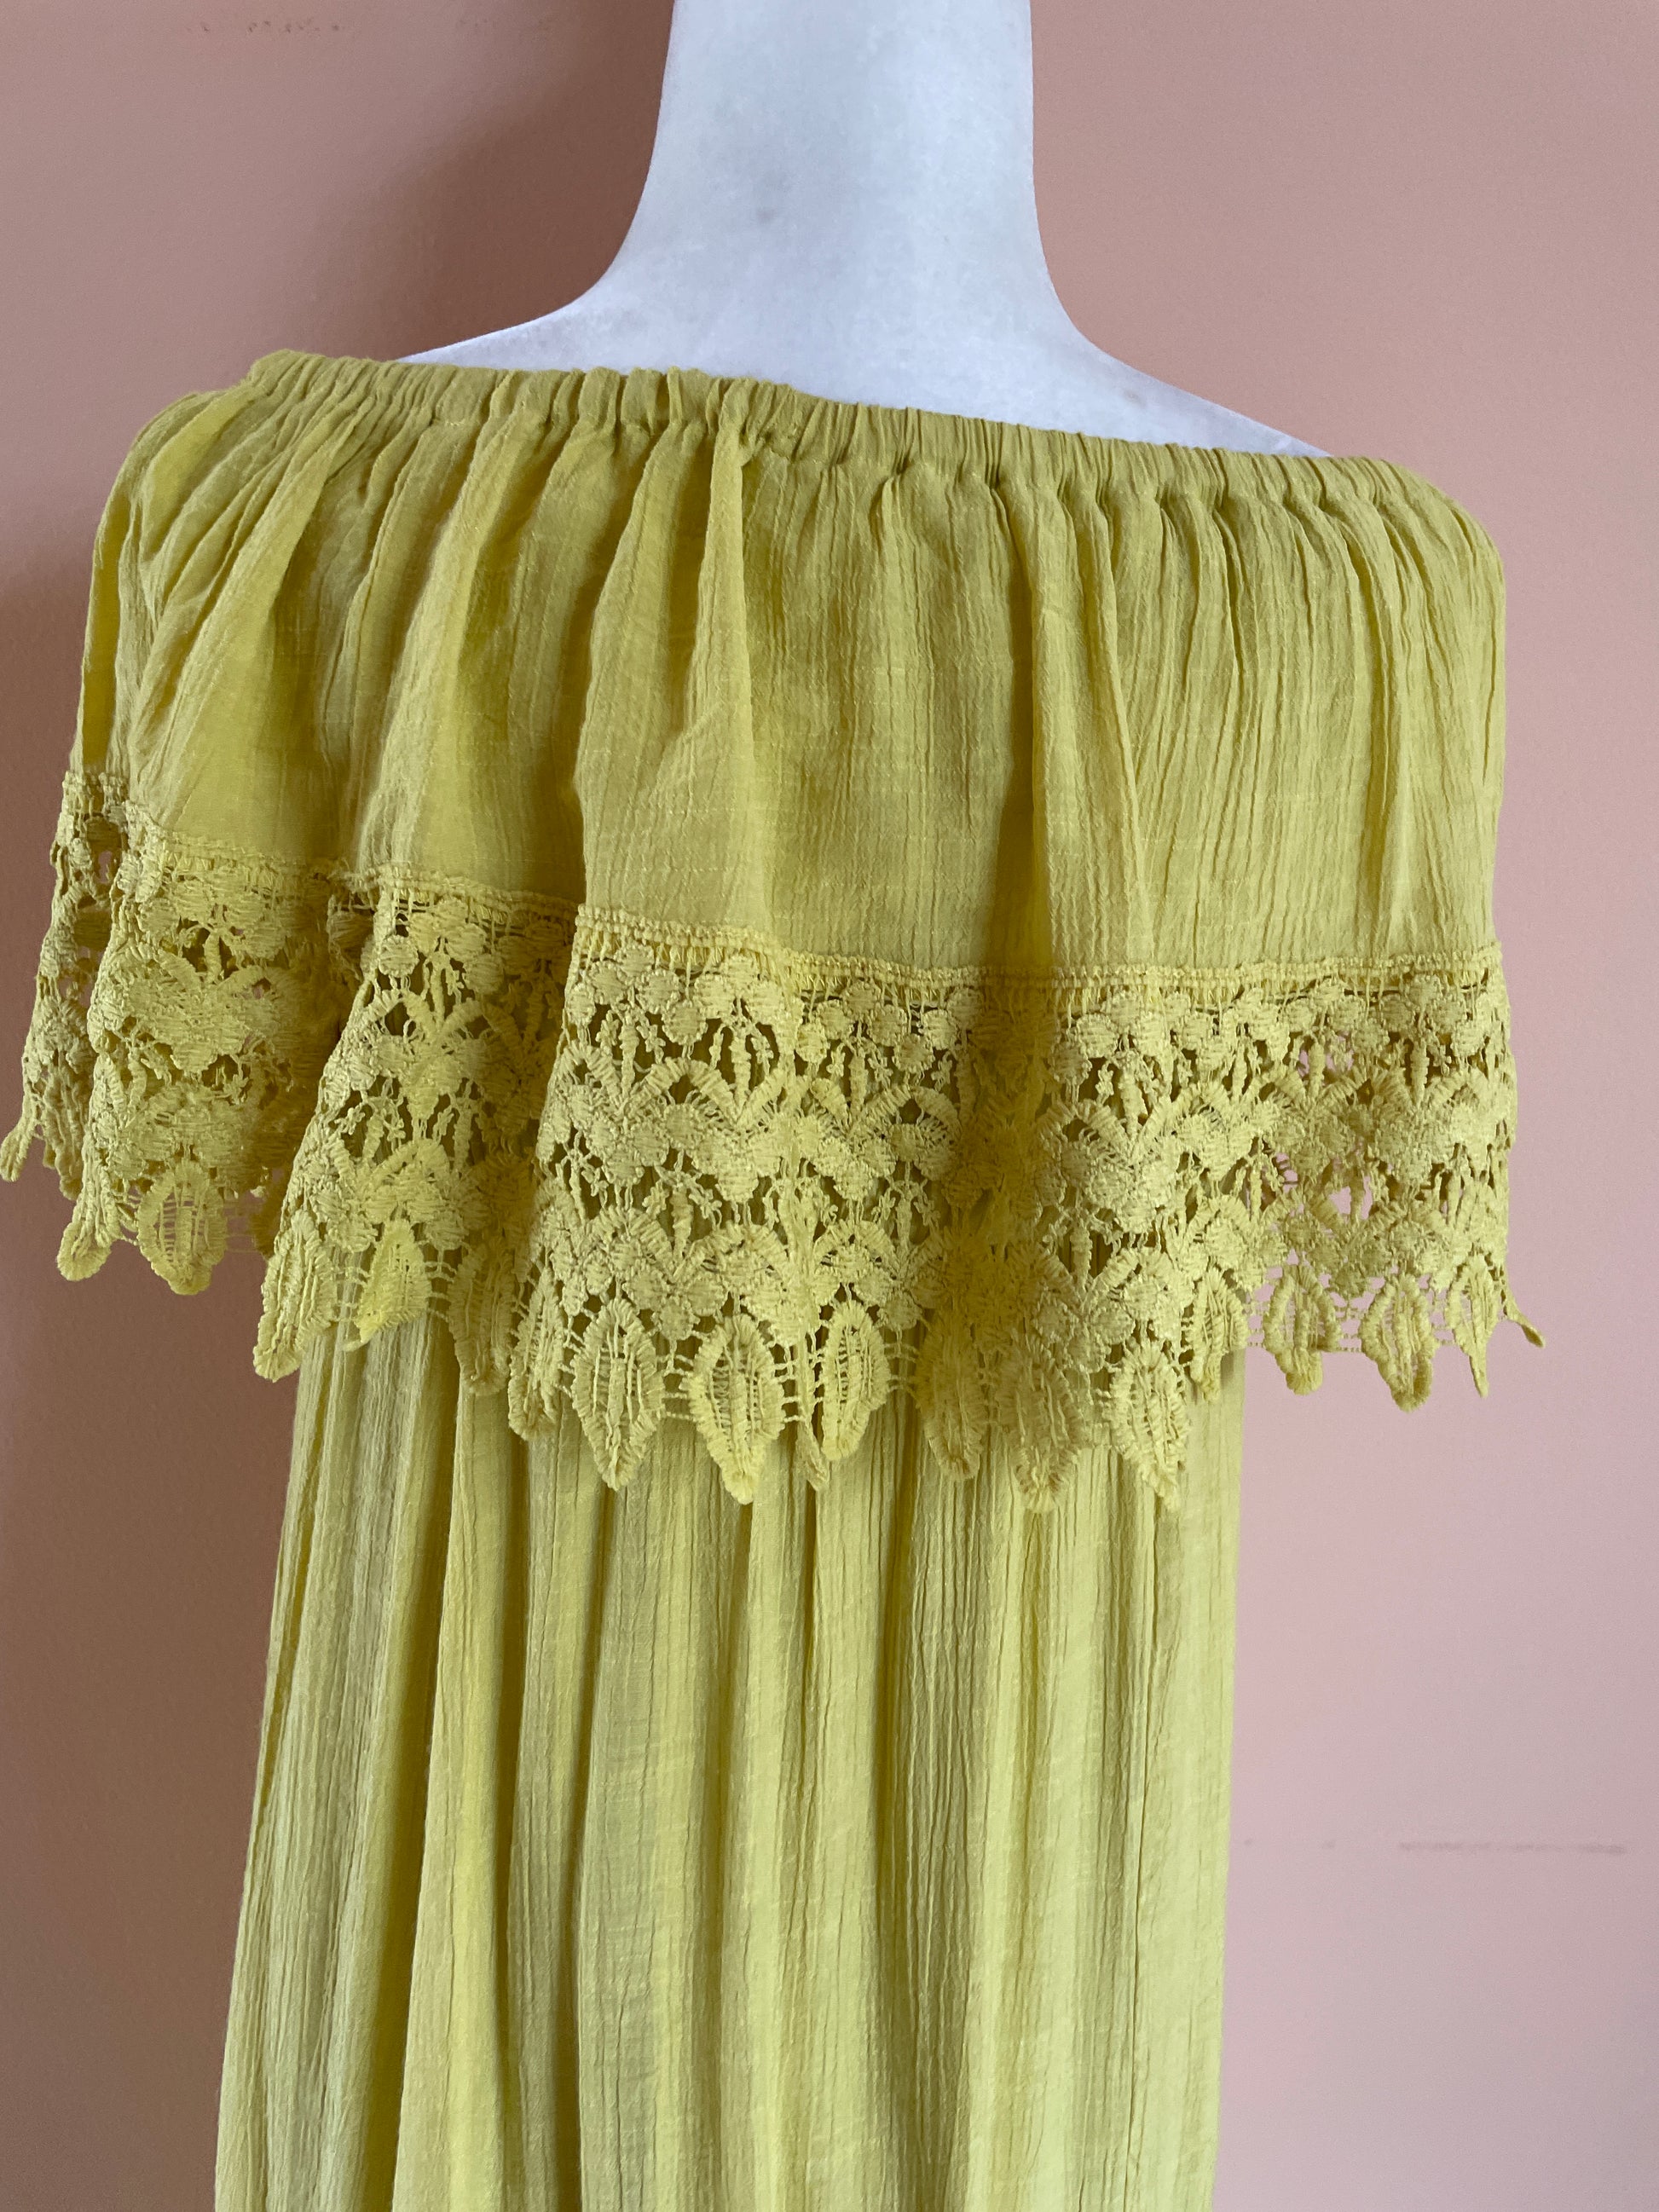  2000s Striking Yellow Floral Crochet Boho Chic Maxi Dress S